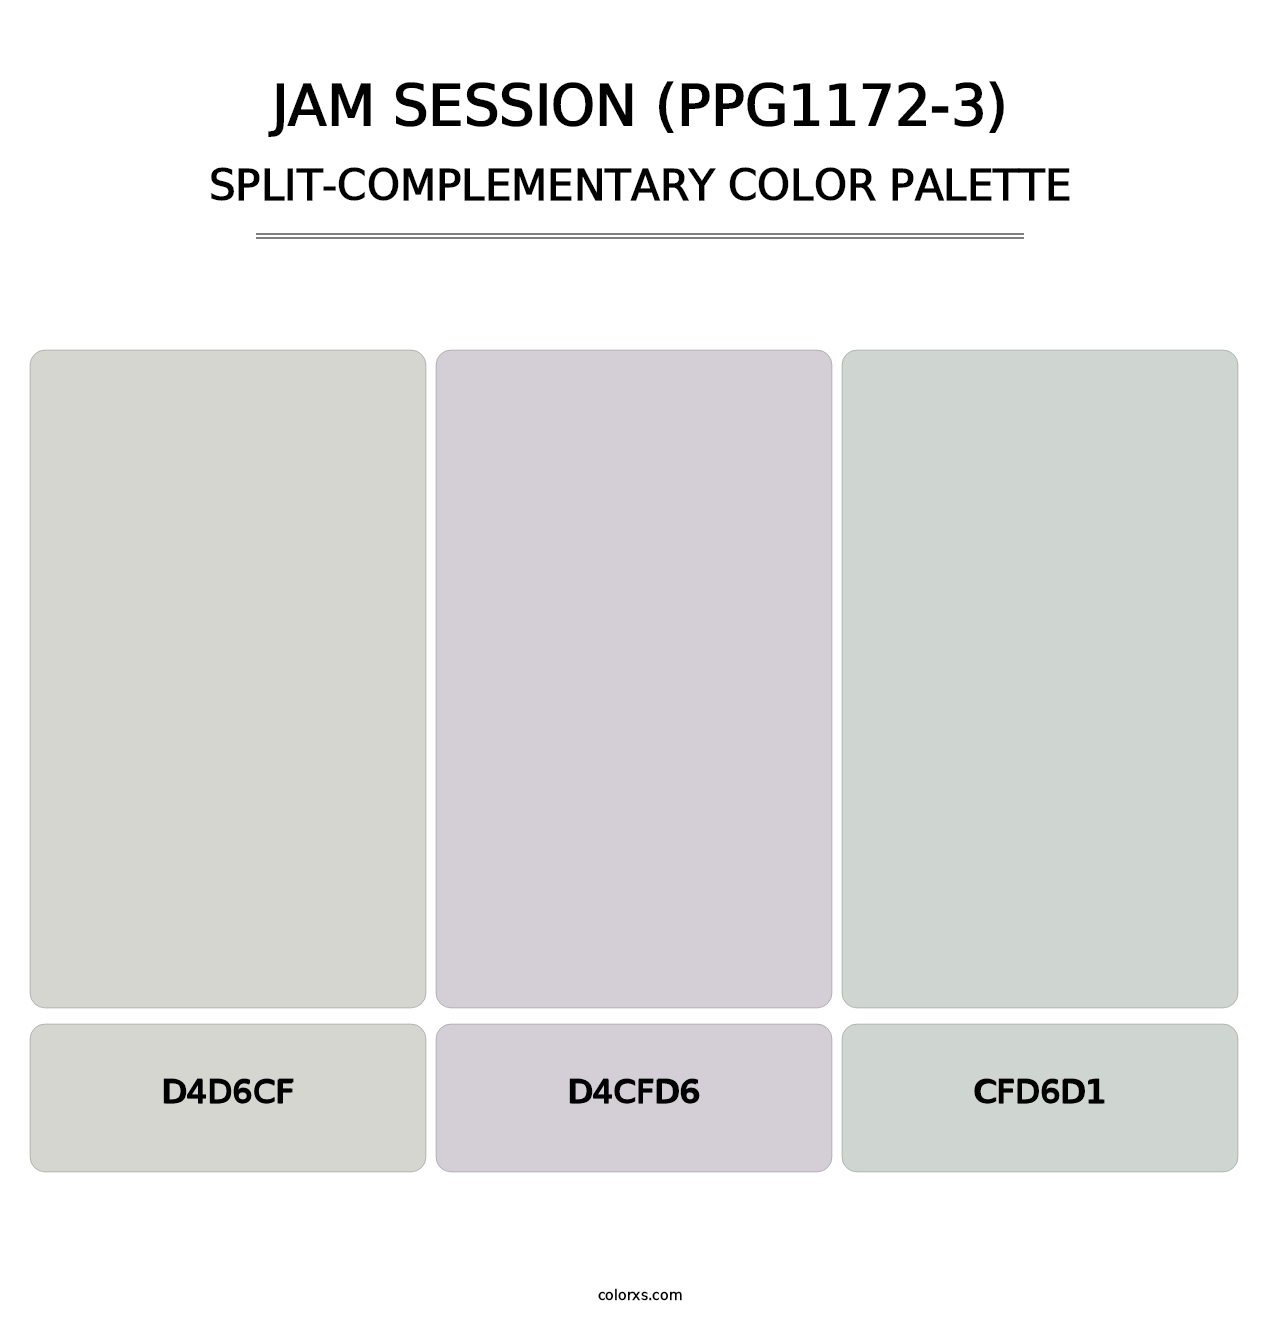 Jam Session (PPG1172-3) - Split-Complementary Color Palette